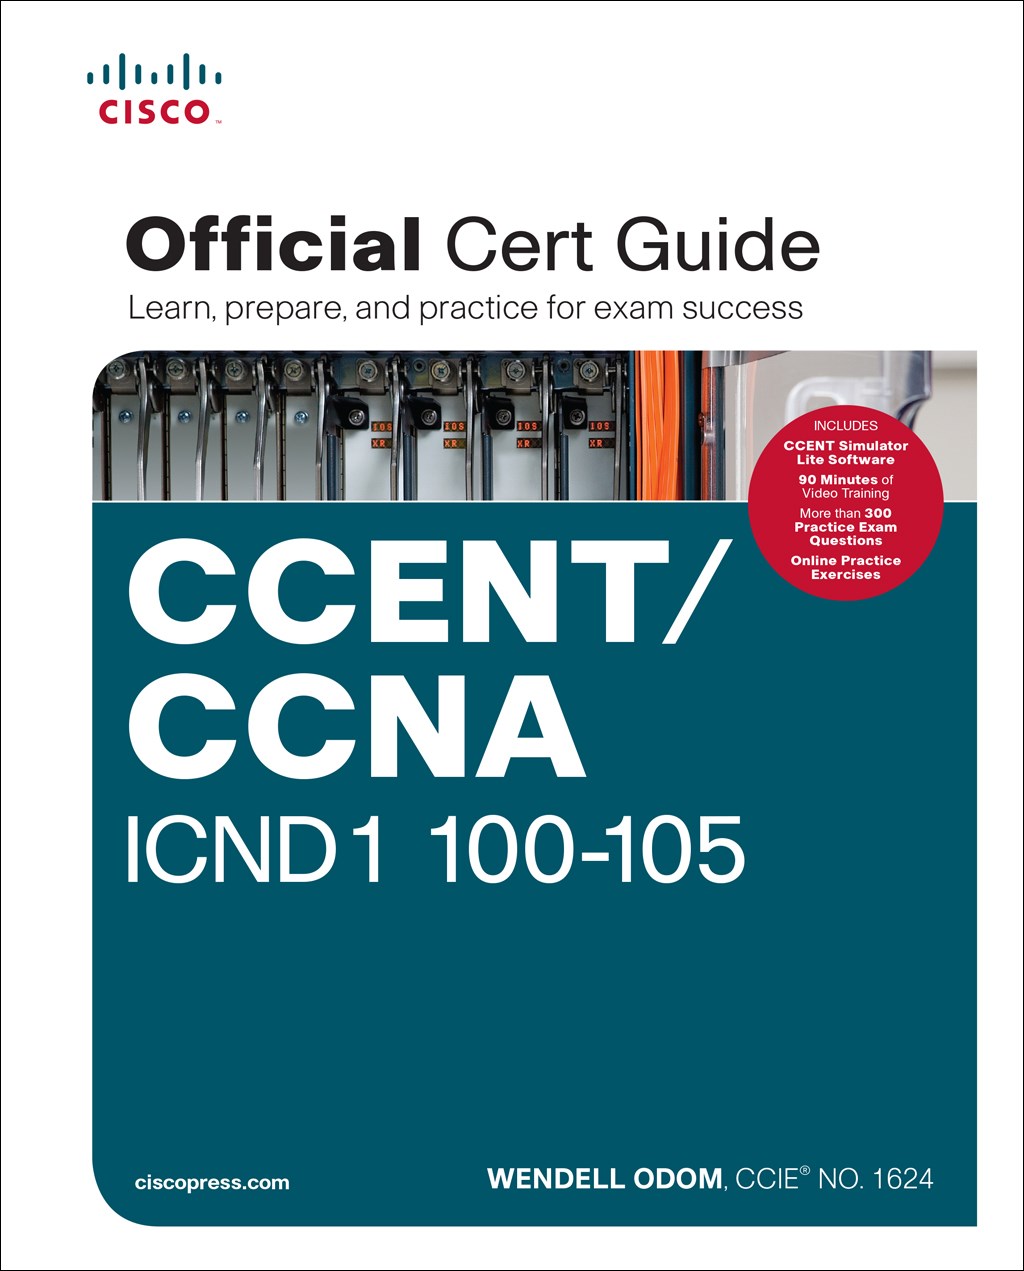 ccent-ccna-icnd1-100-105-official-cert-guide